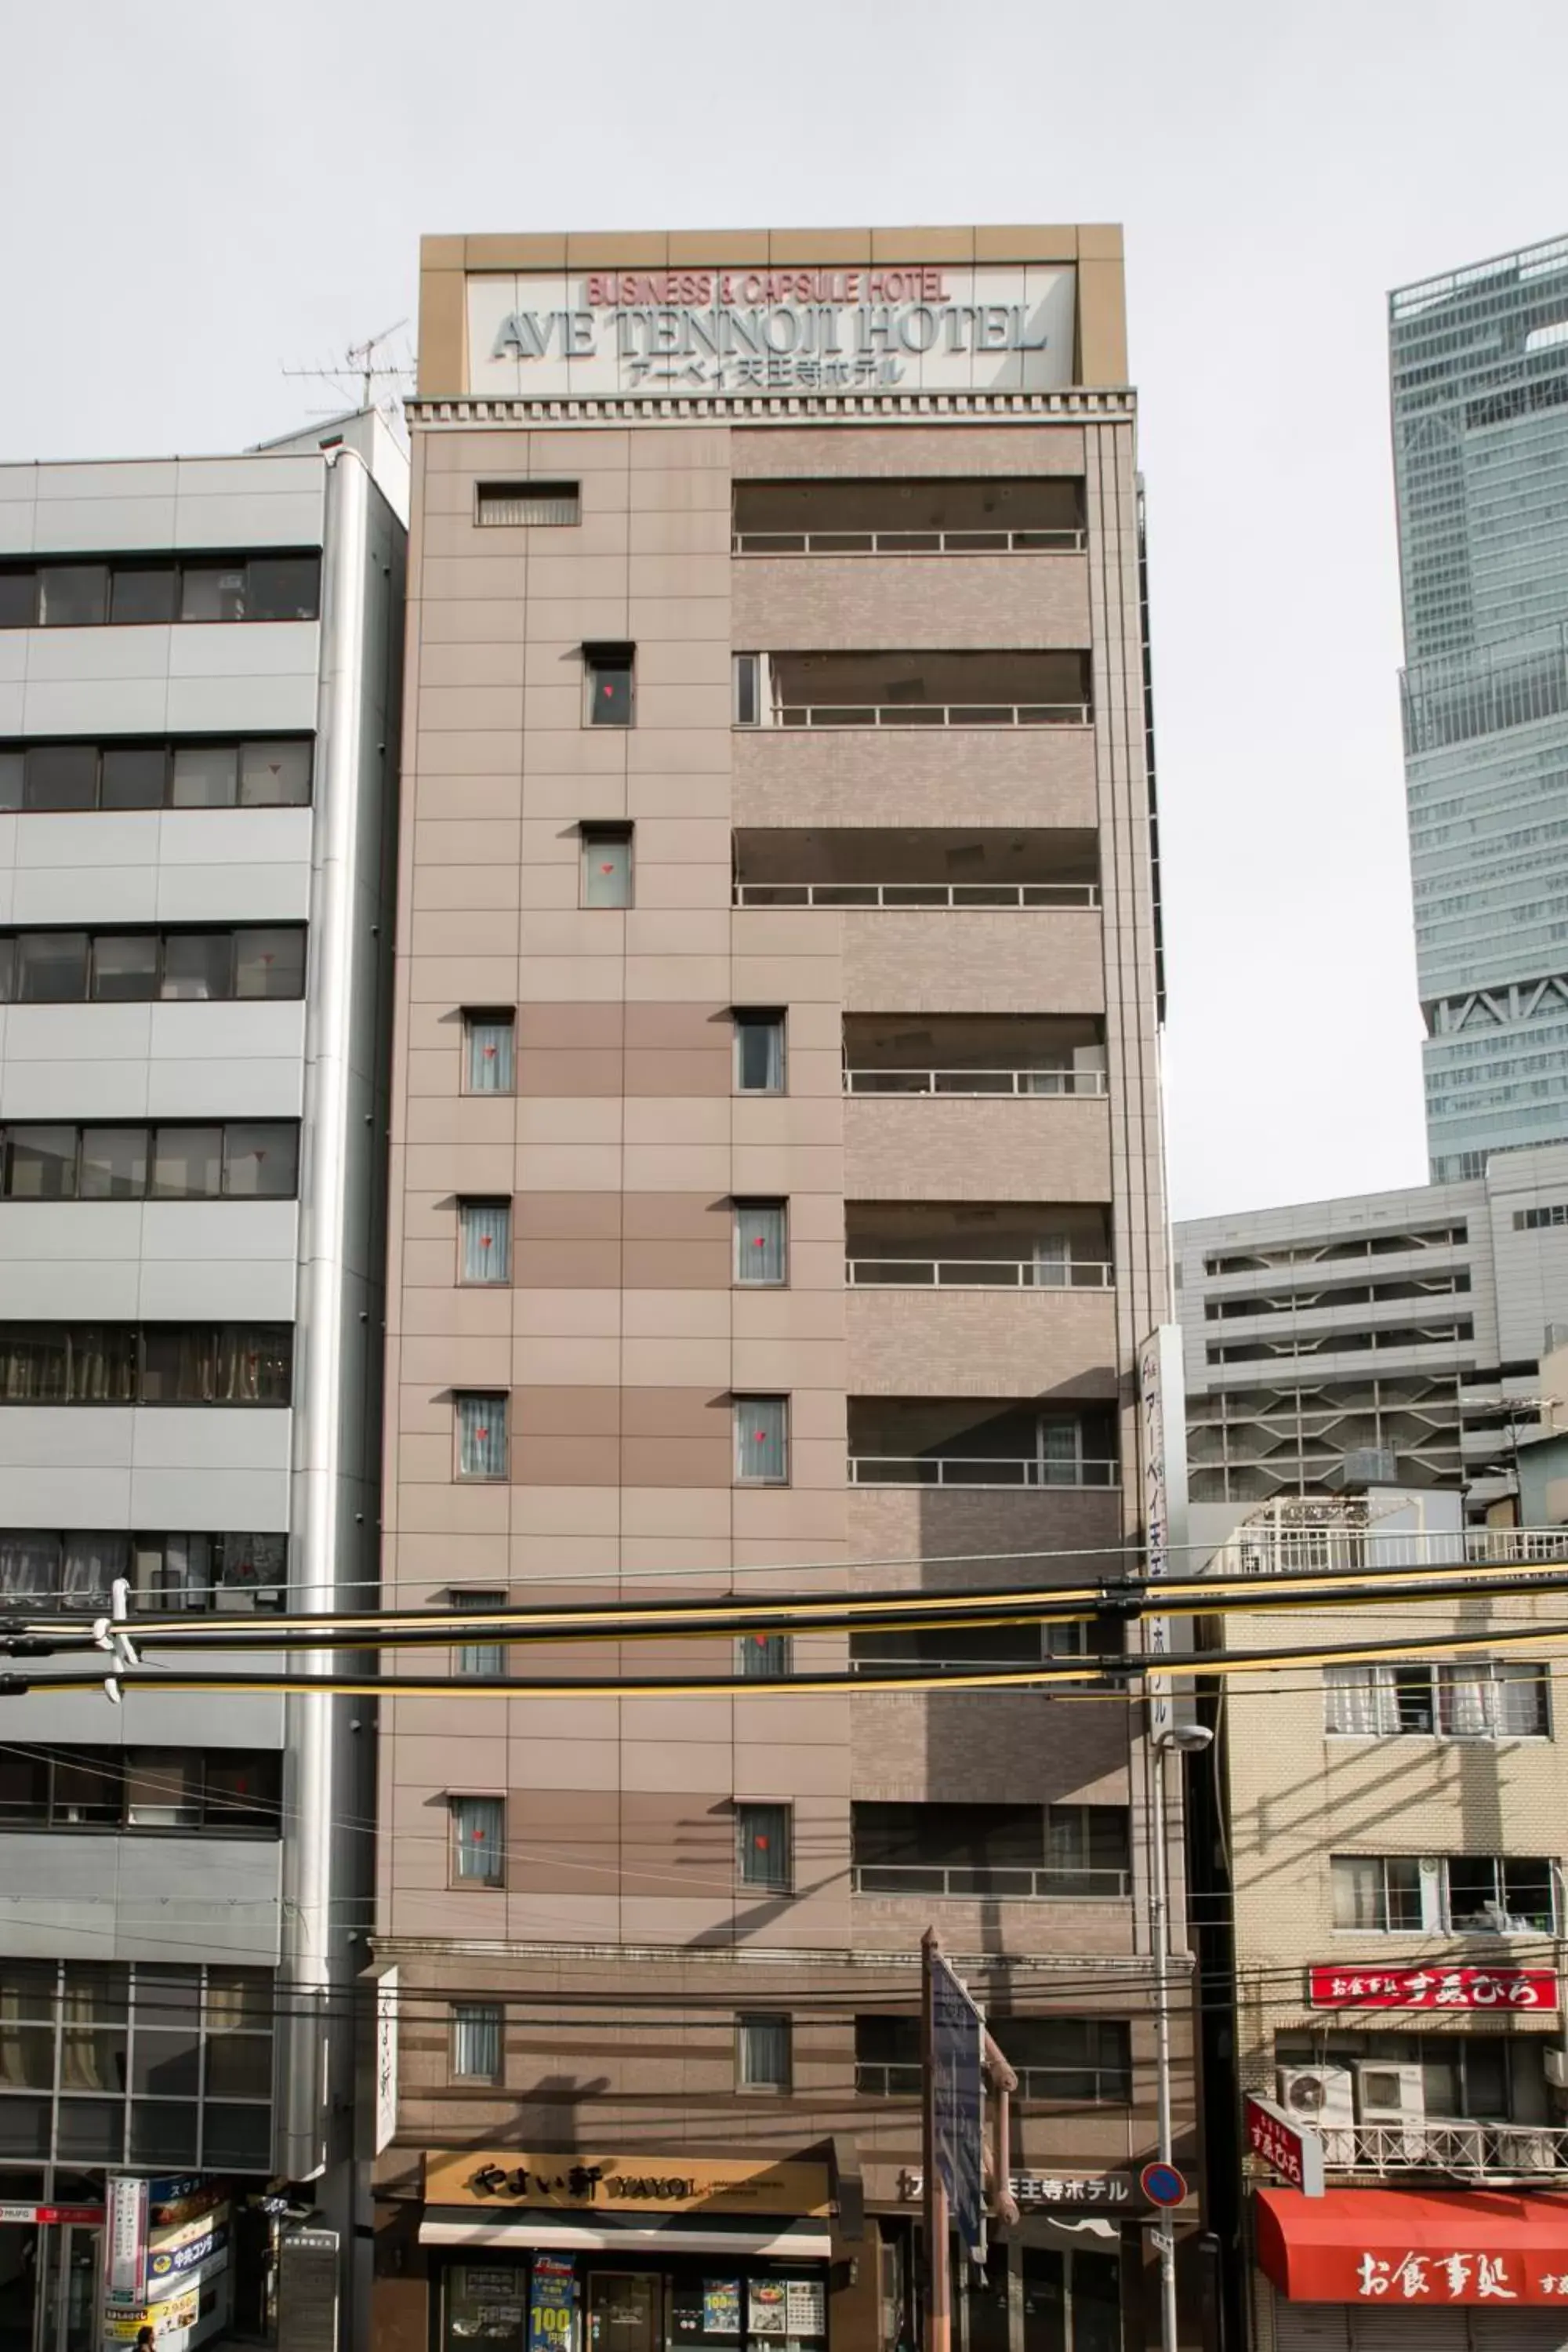 Property Building in Ave Tennoji Hotel